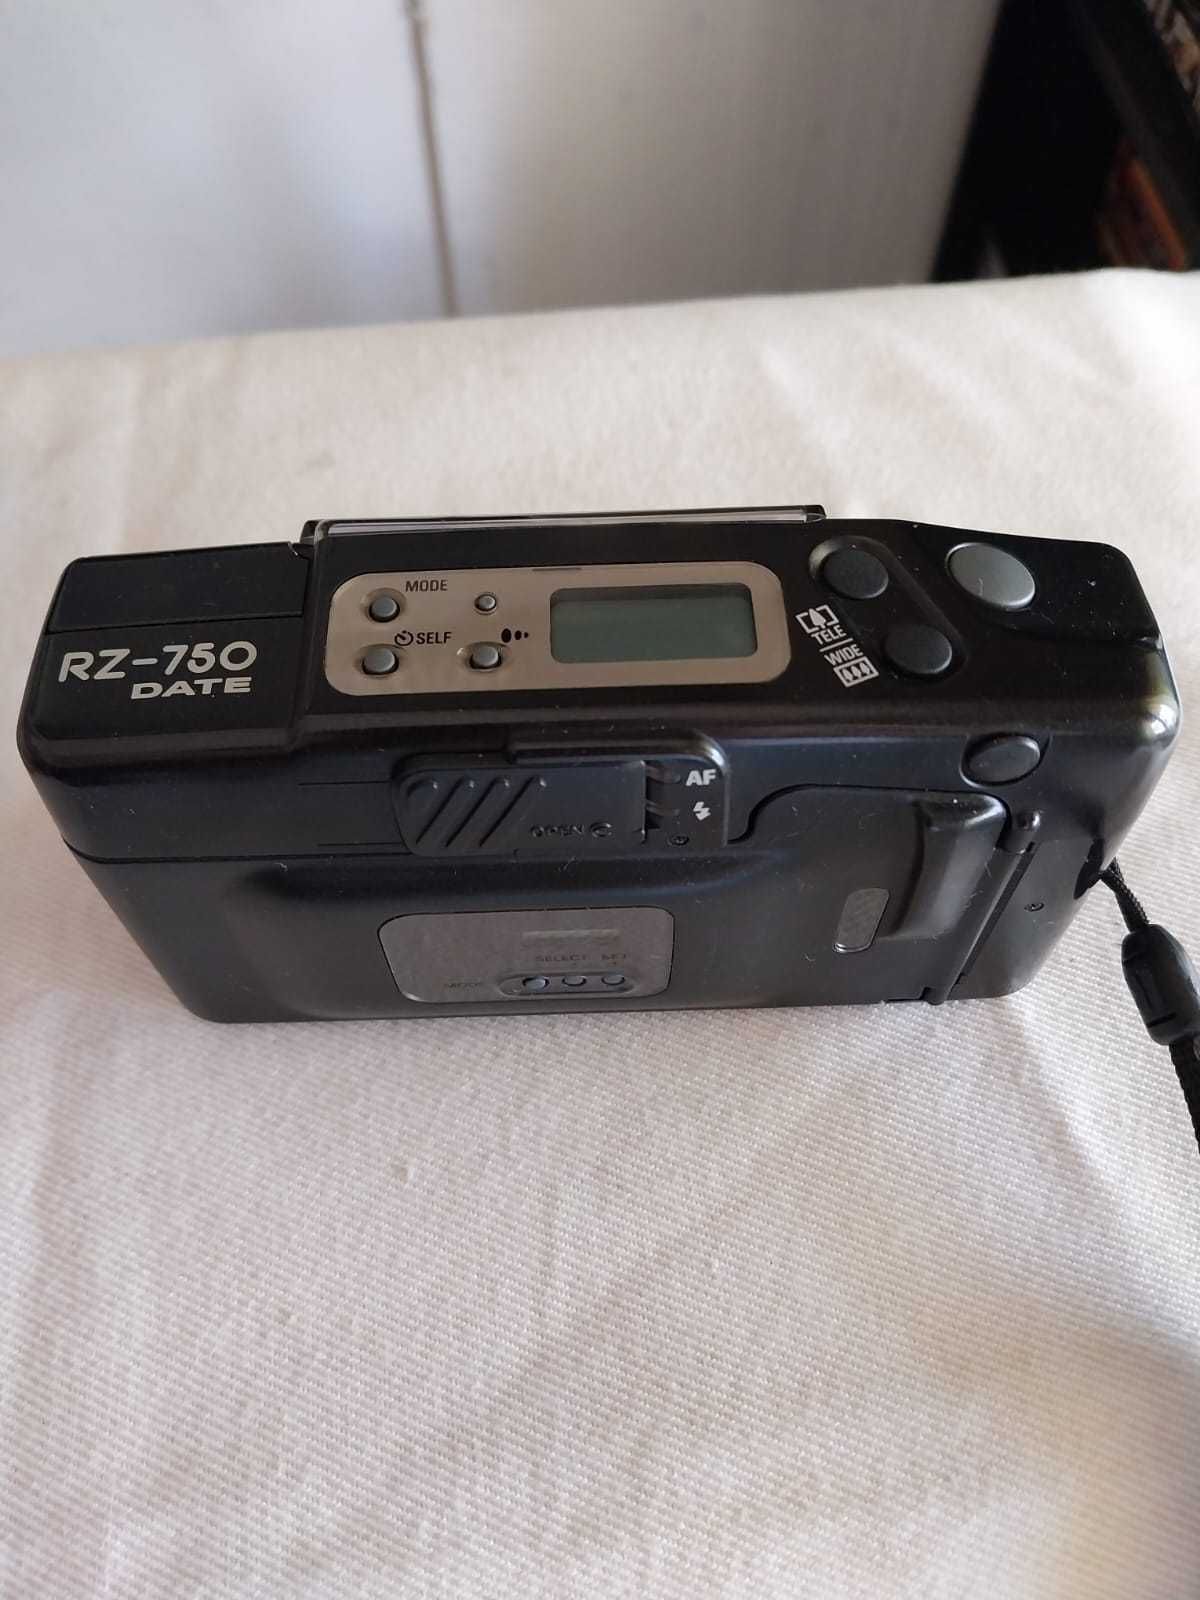 Maquina fotográfica Ricoh RZ-750 Date